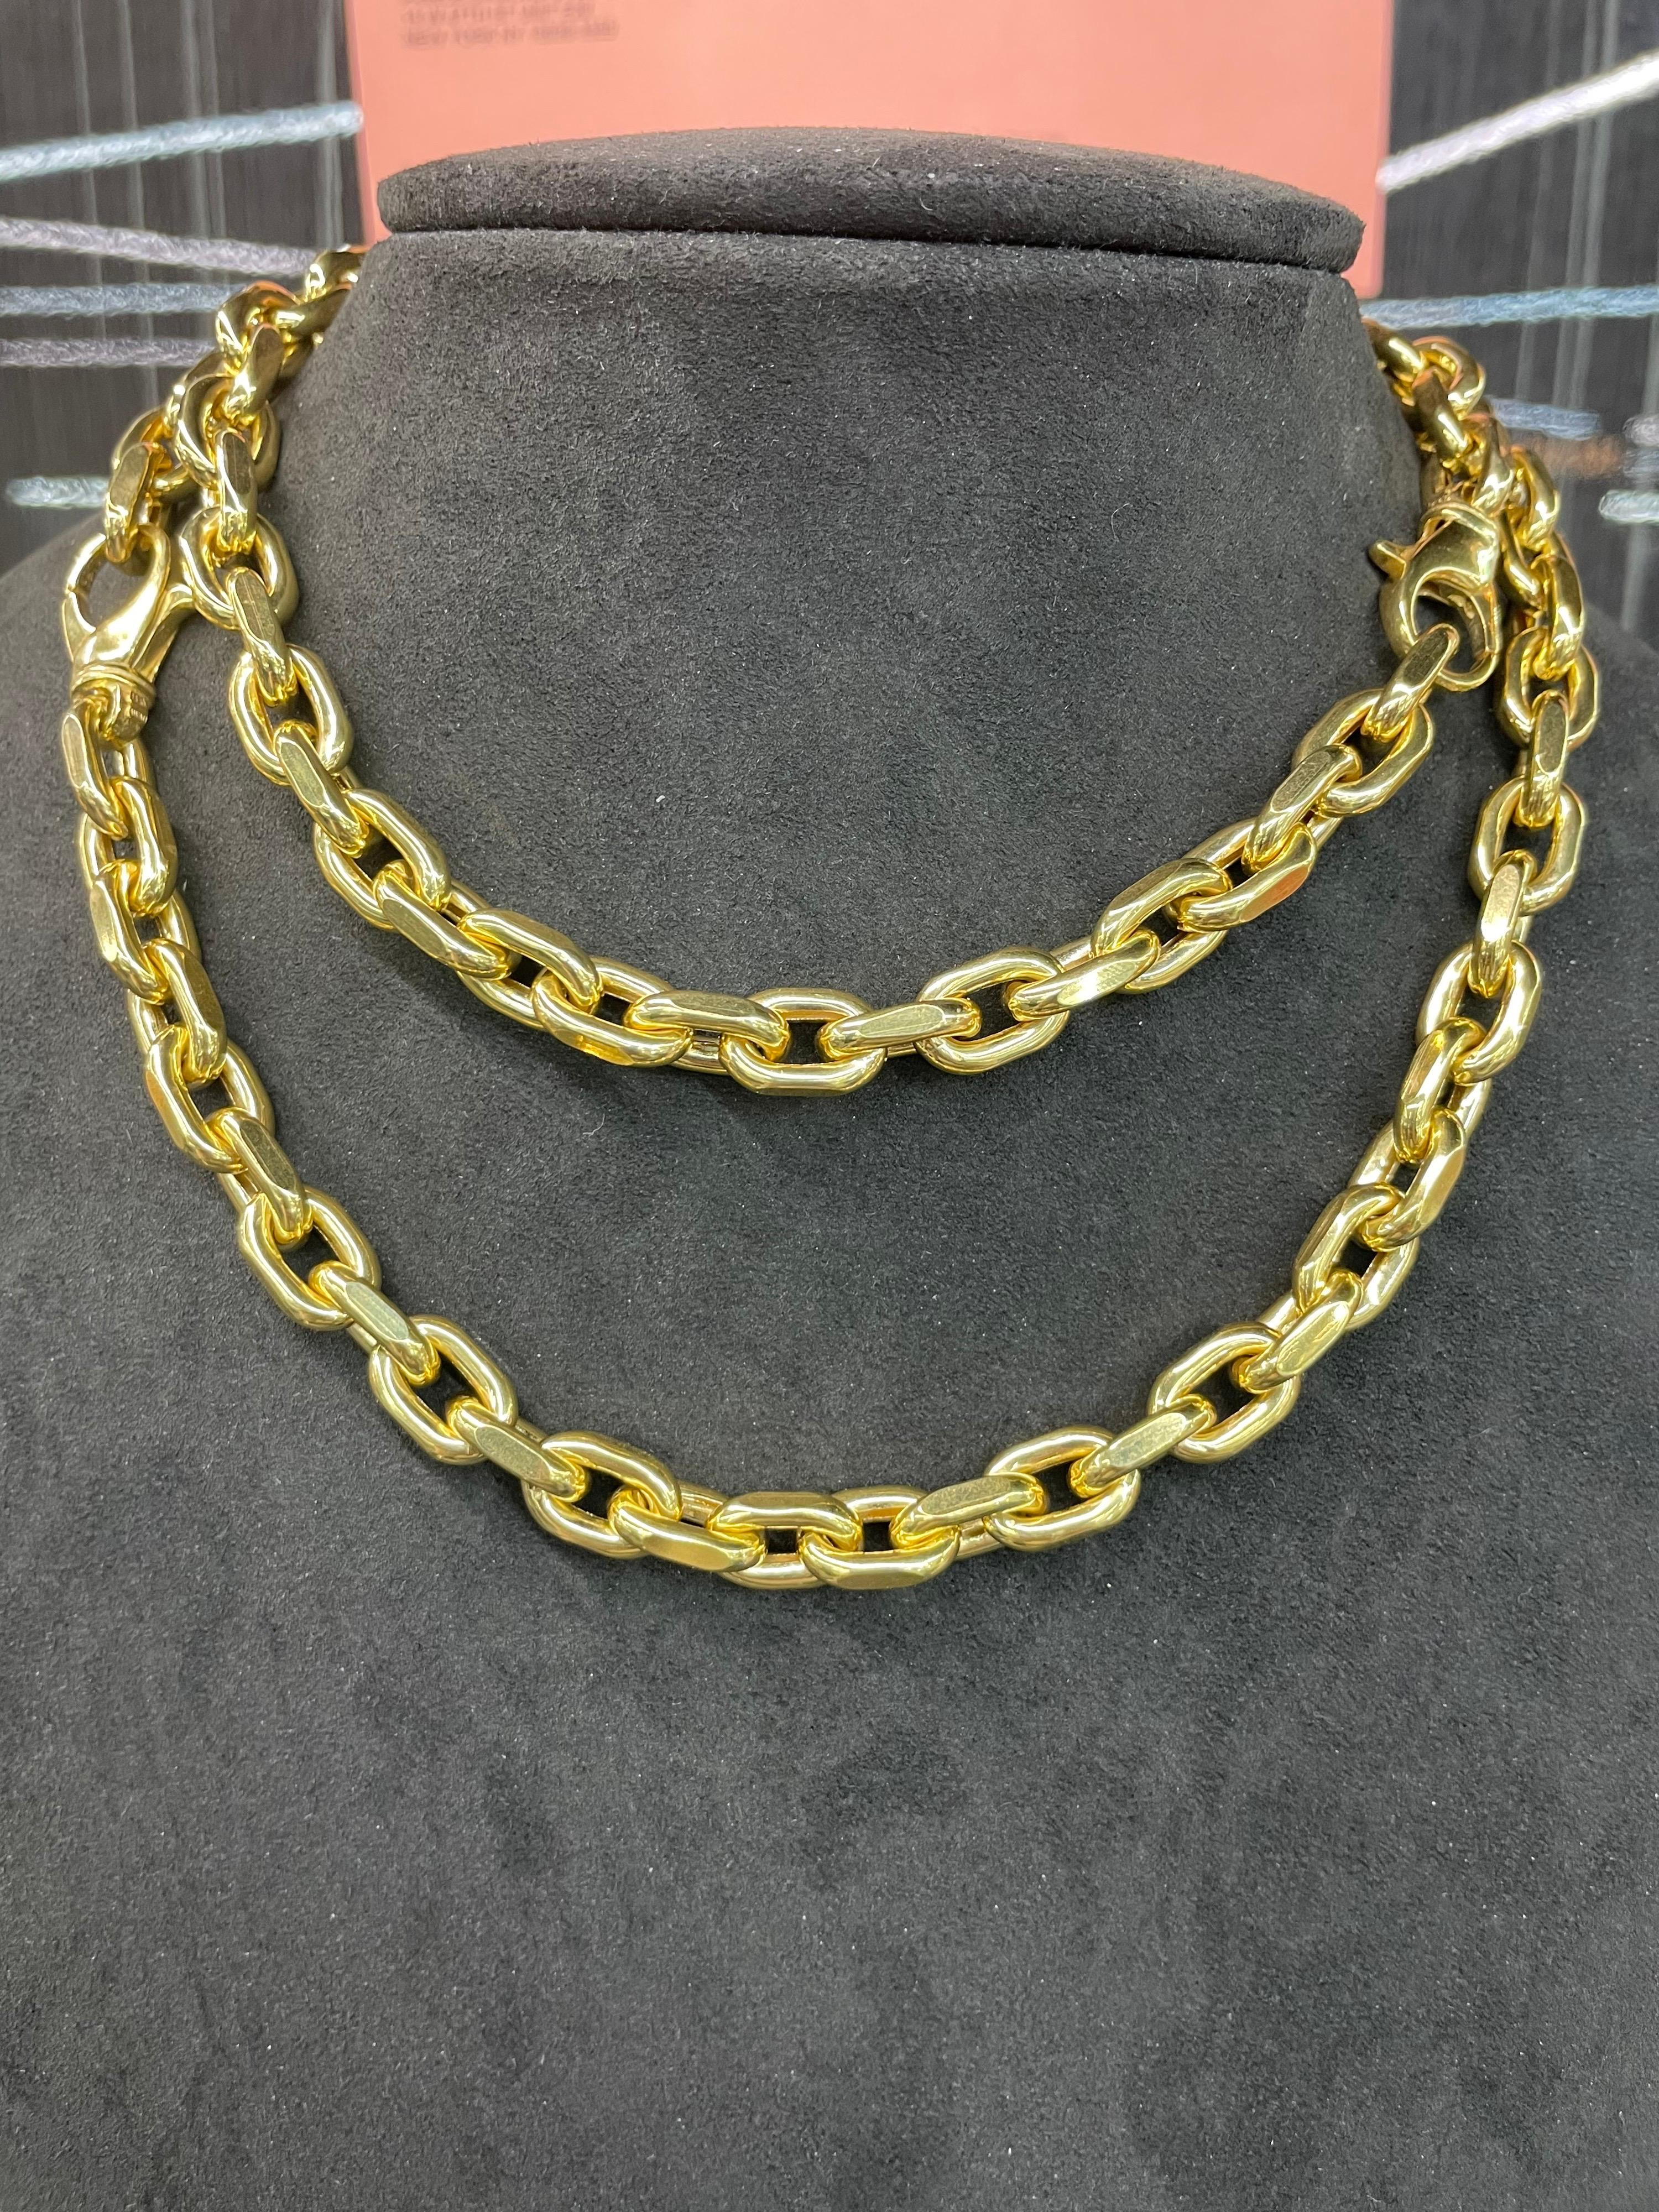 14 Karat Yellow Gold Detachable Link Necklace Bracelet 73.4 Grams 33 Inches For Sale 8